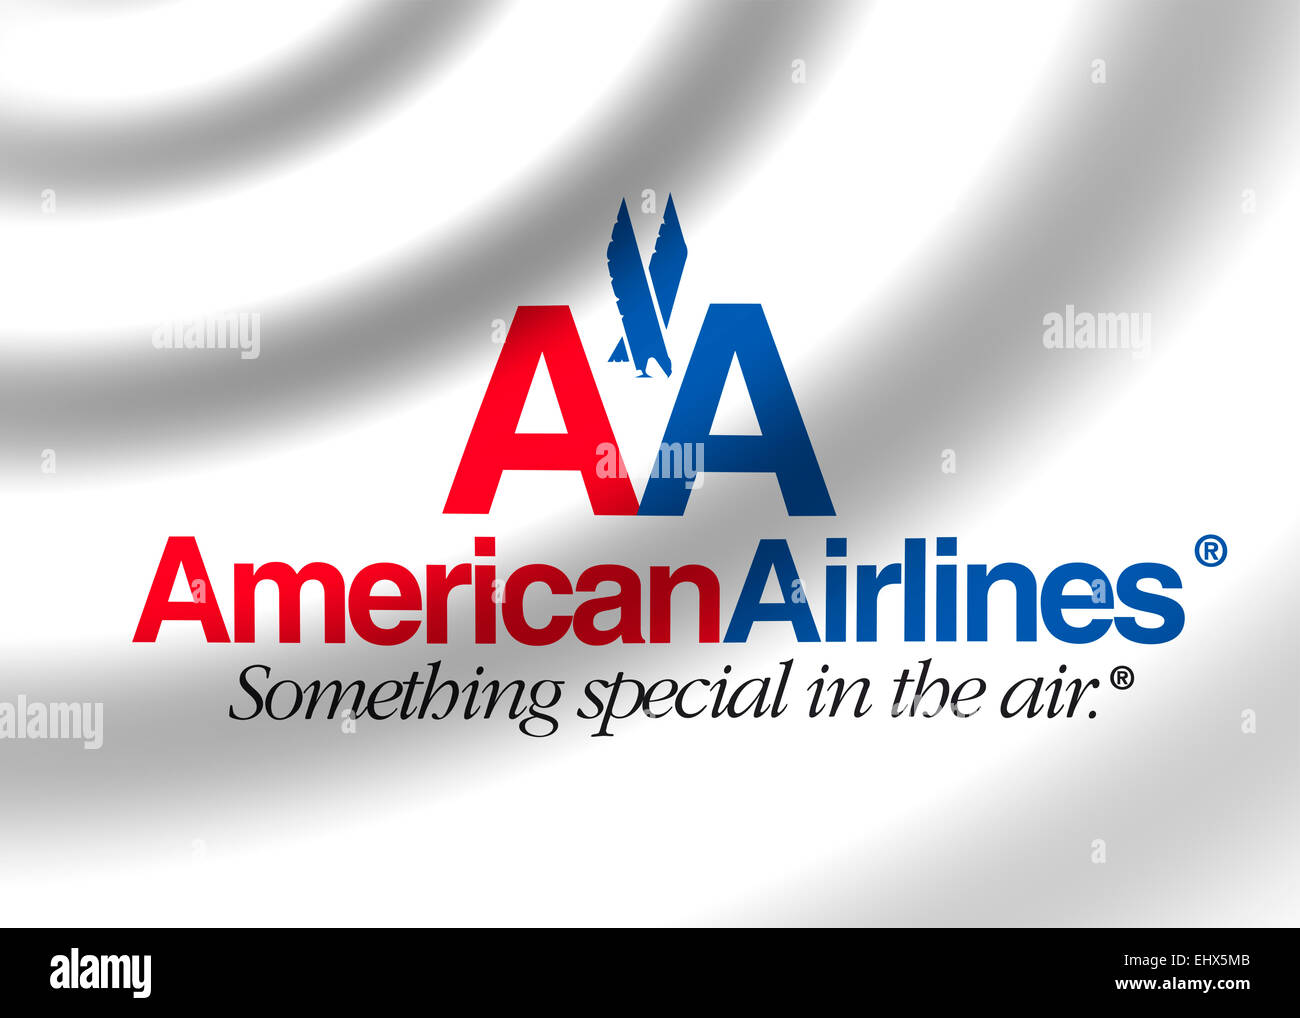 American Airlines logo symbol icon flag emblem Stock Photo